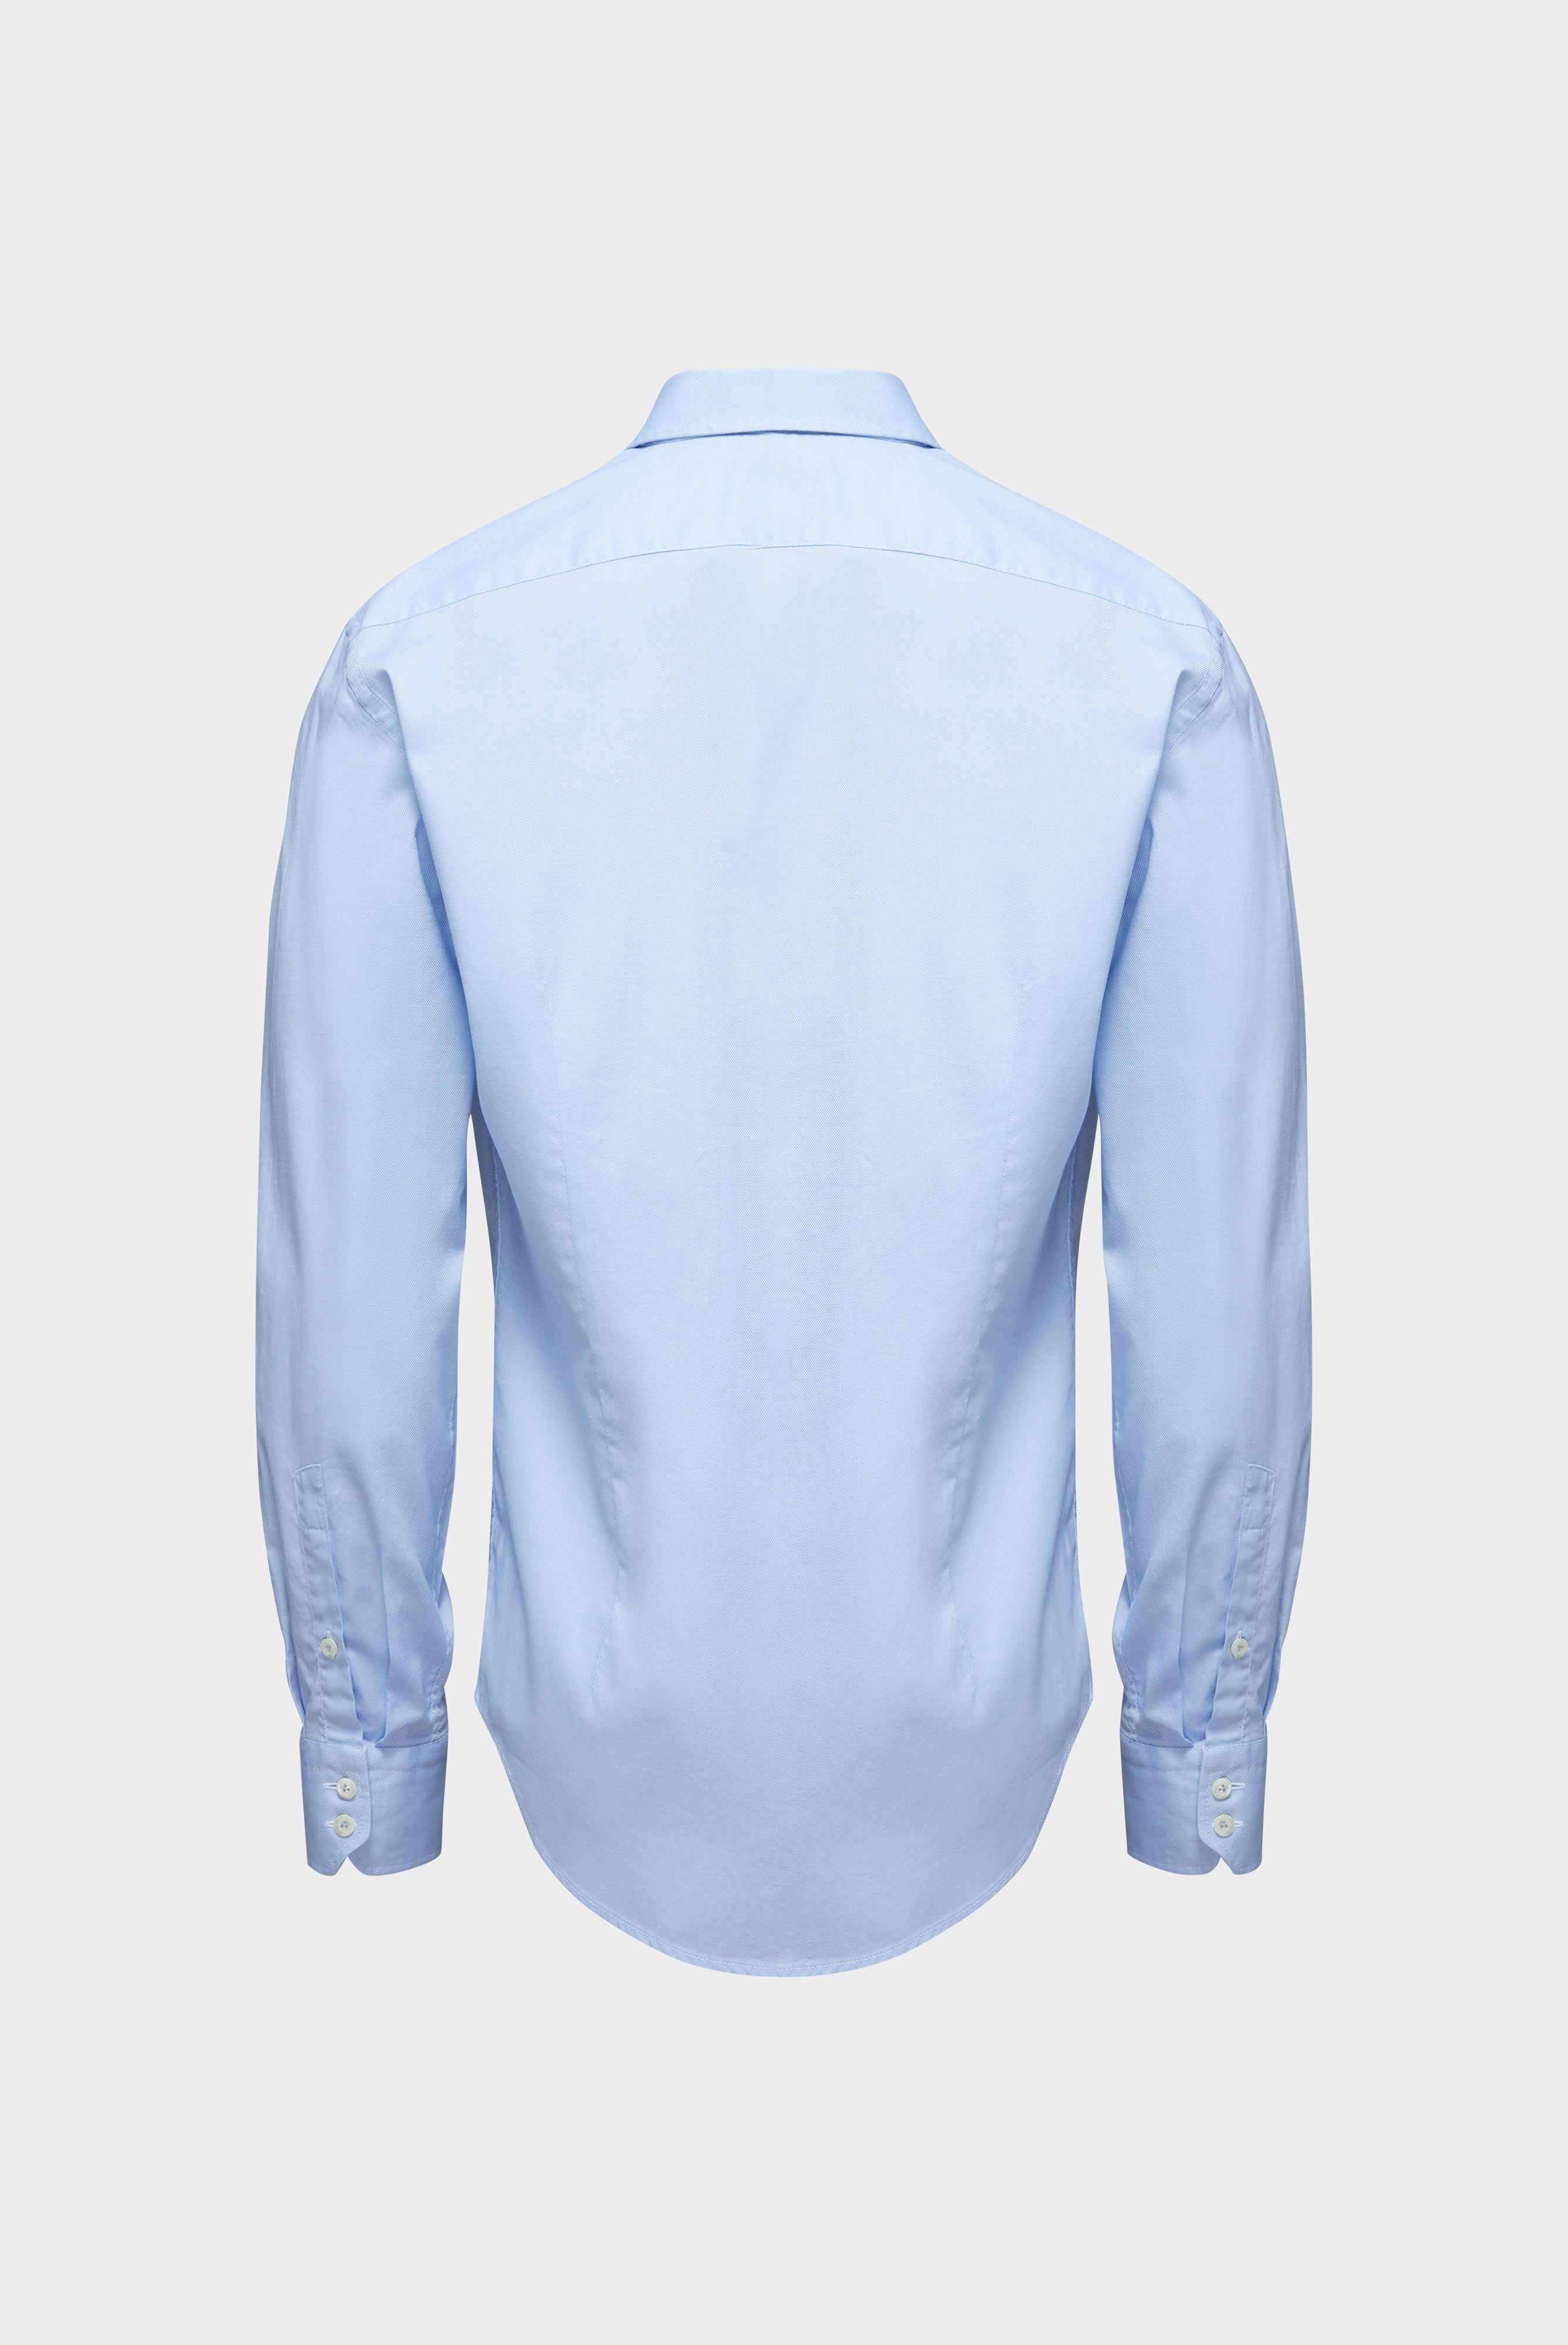 Casual Hemden+Button-Down Hemd mit Kontrastband Tailor Fit+20.2013.C5.150272.720.38